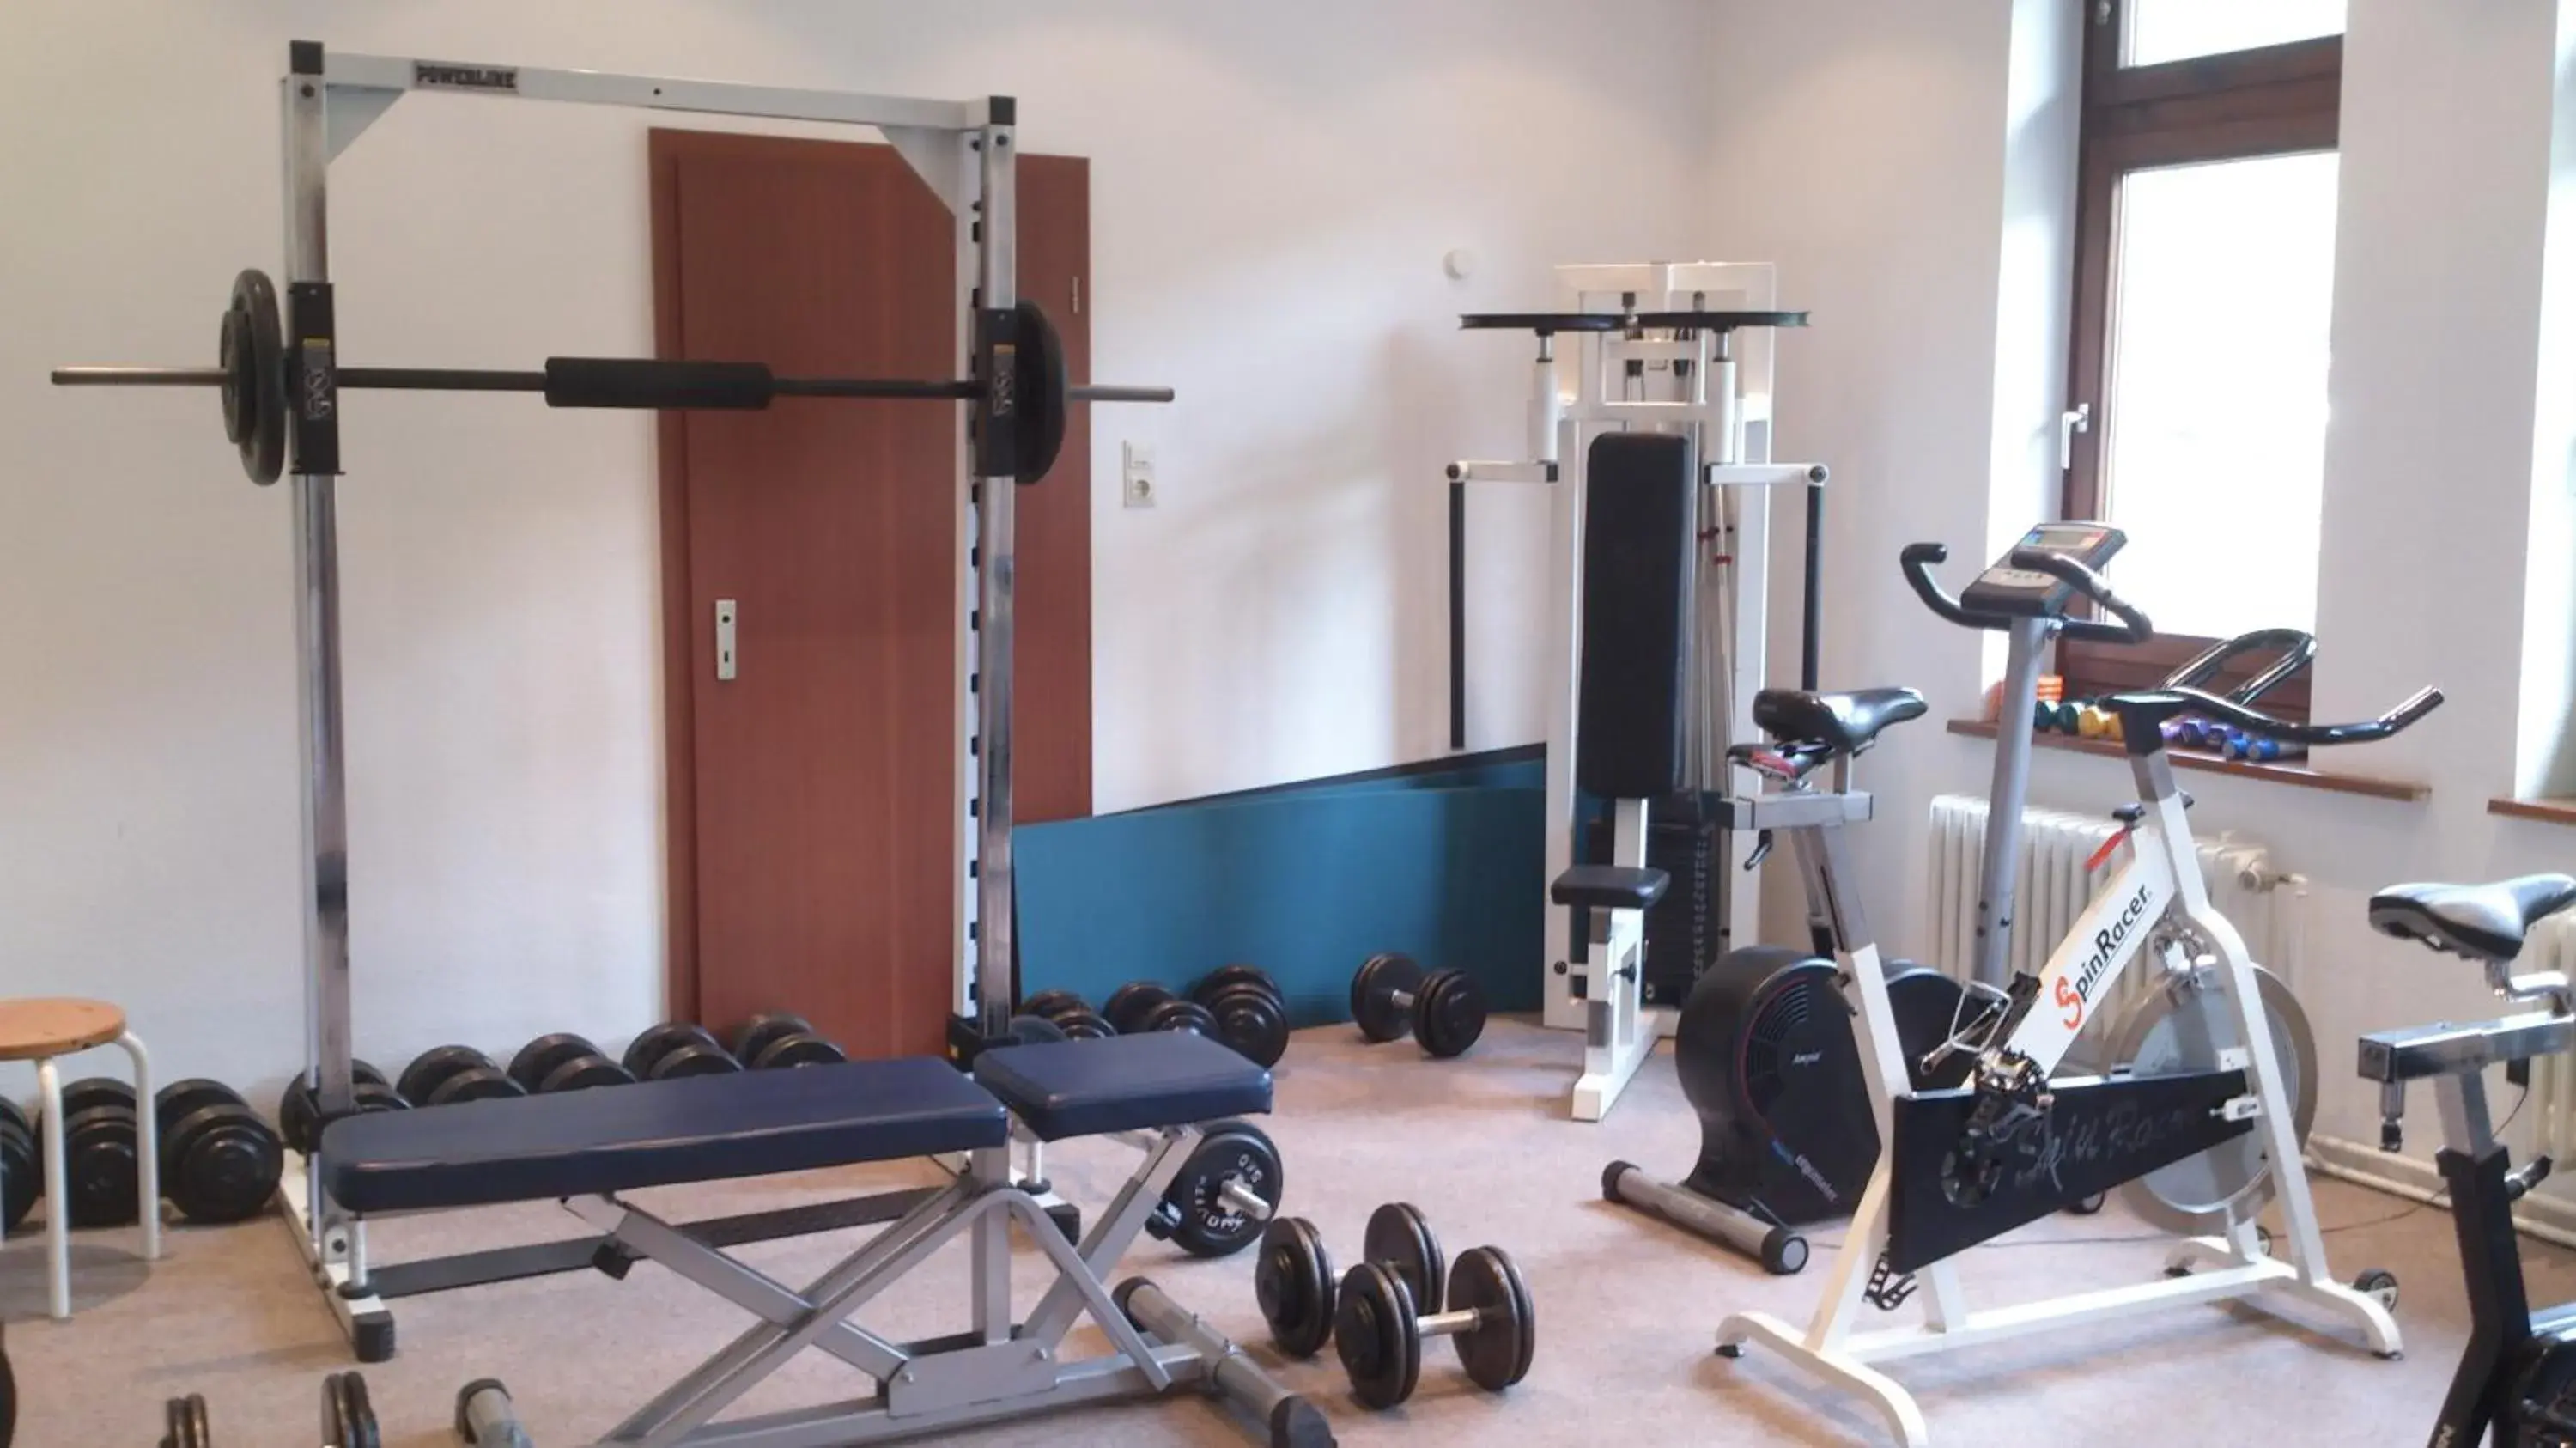 Fitness centre/facilities, Fitness Center/Facilities in Hotel Bergfrieden